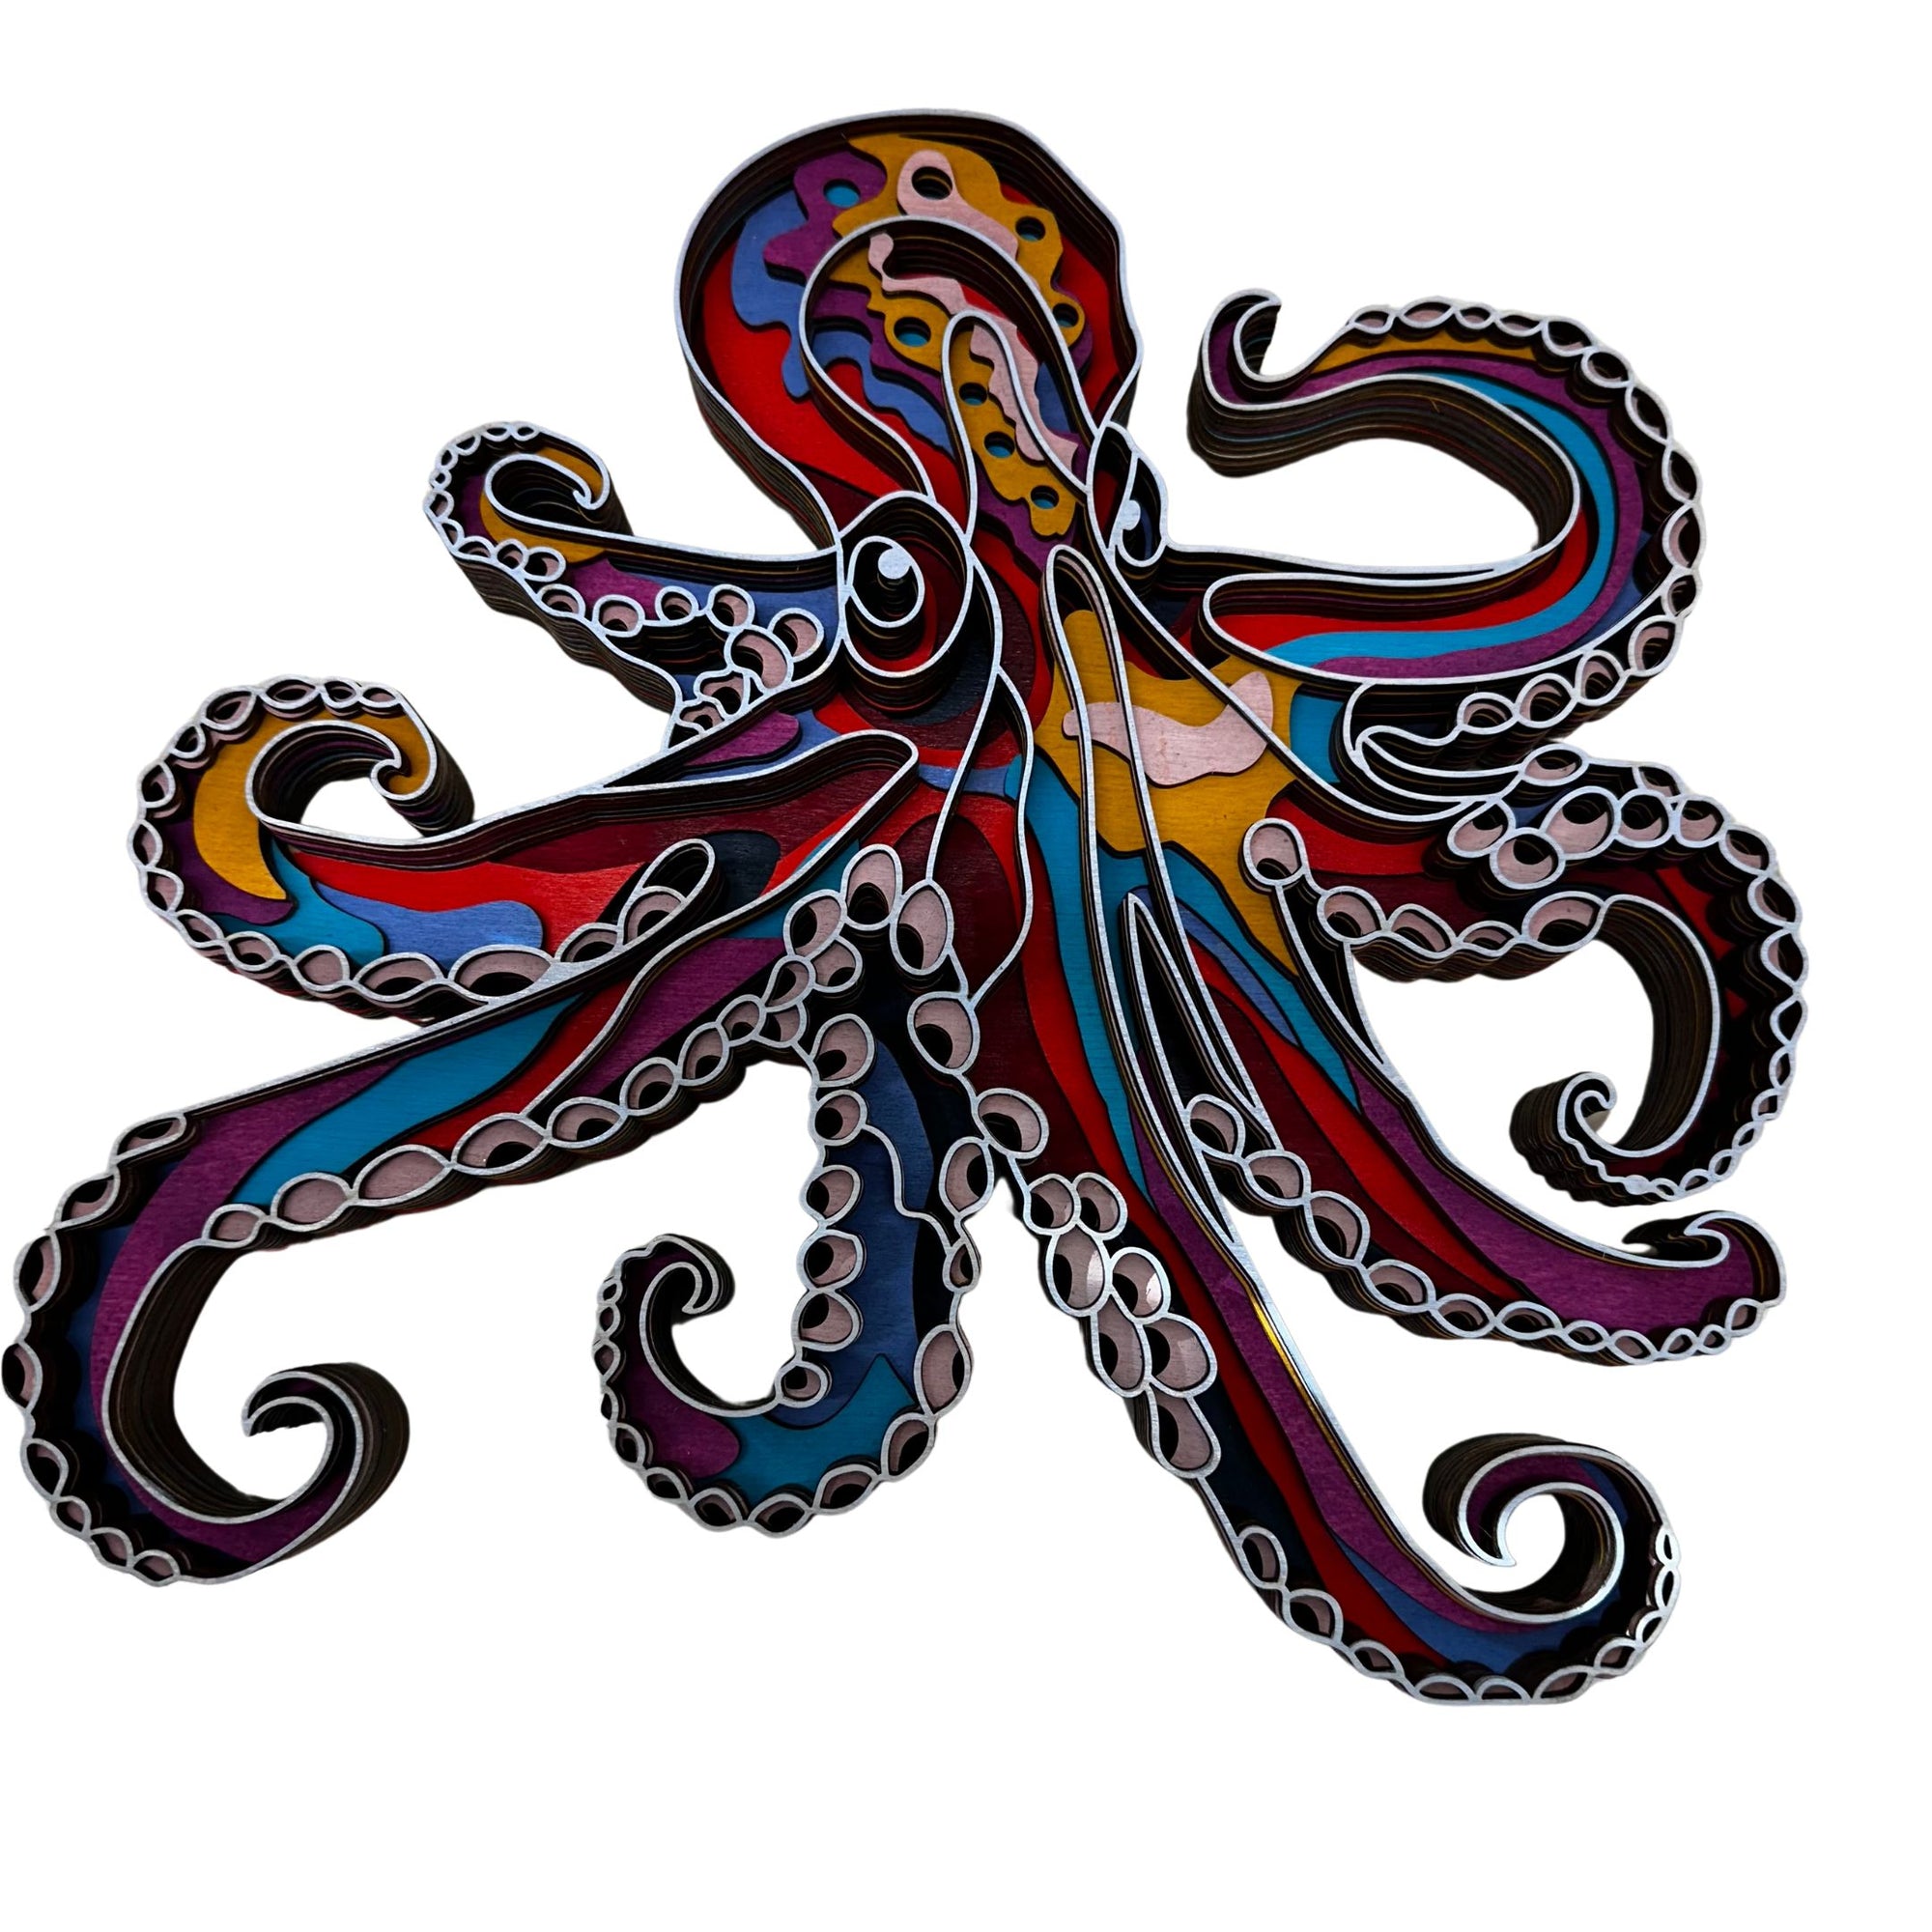 Laser-cut Wood Sucker Punch Octopus